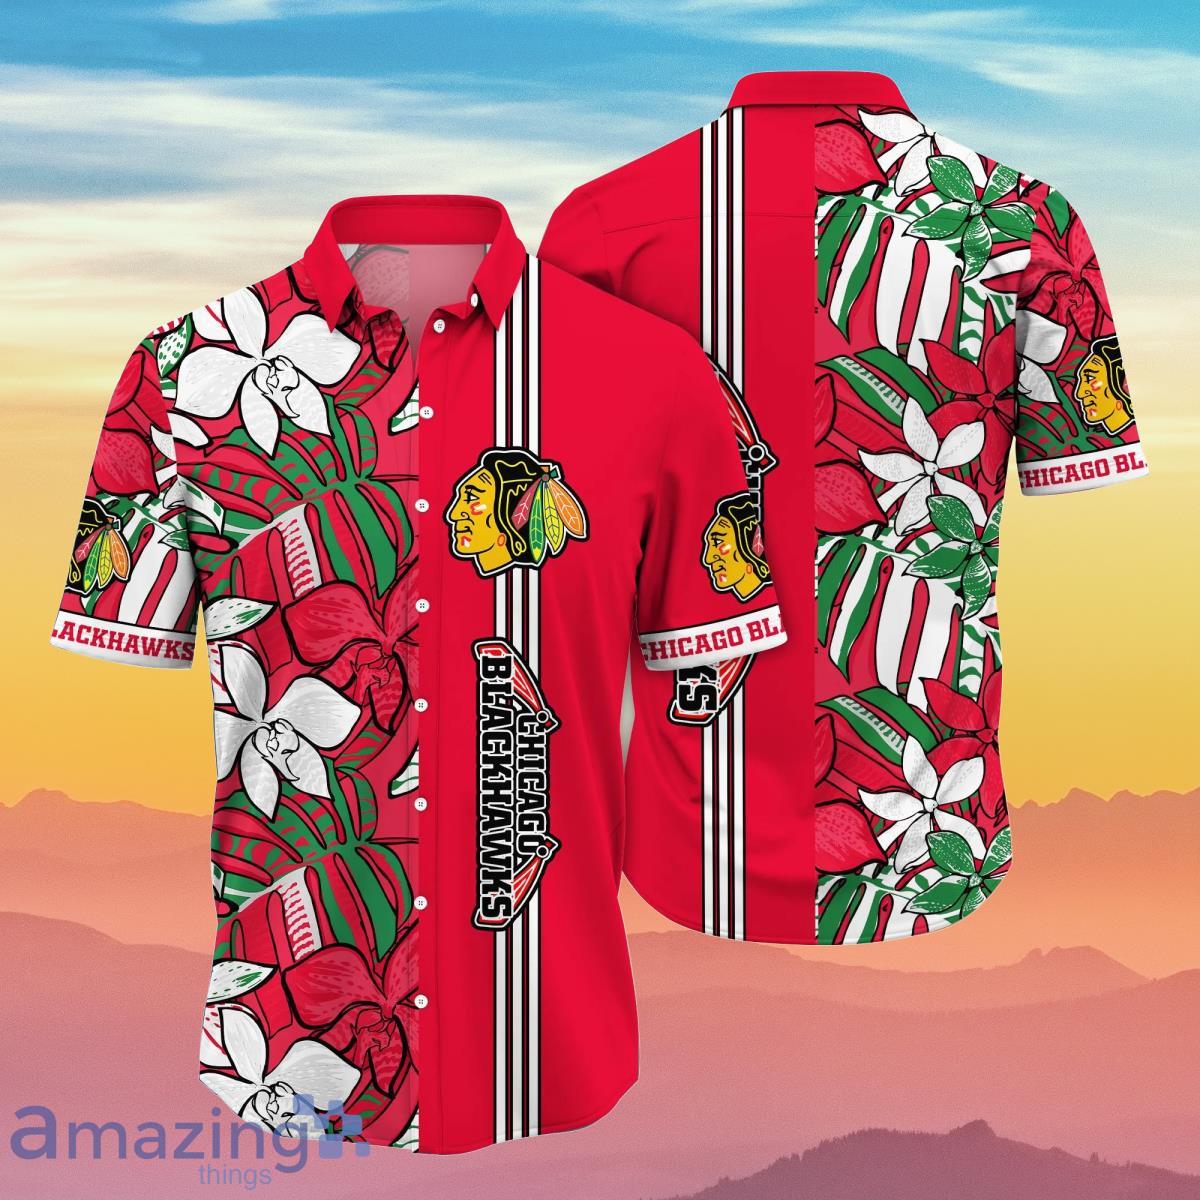 Chicago Blackhawks NHL Flower Hawaiian Shirt Impressive Gift For Real Fans